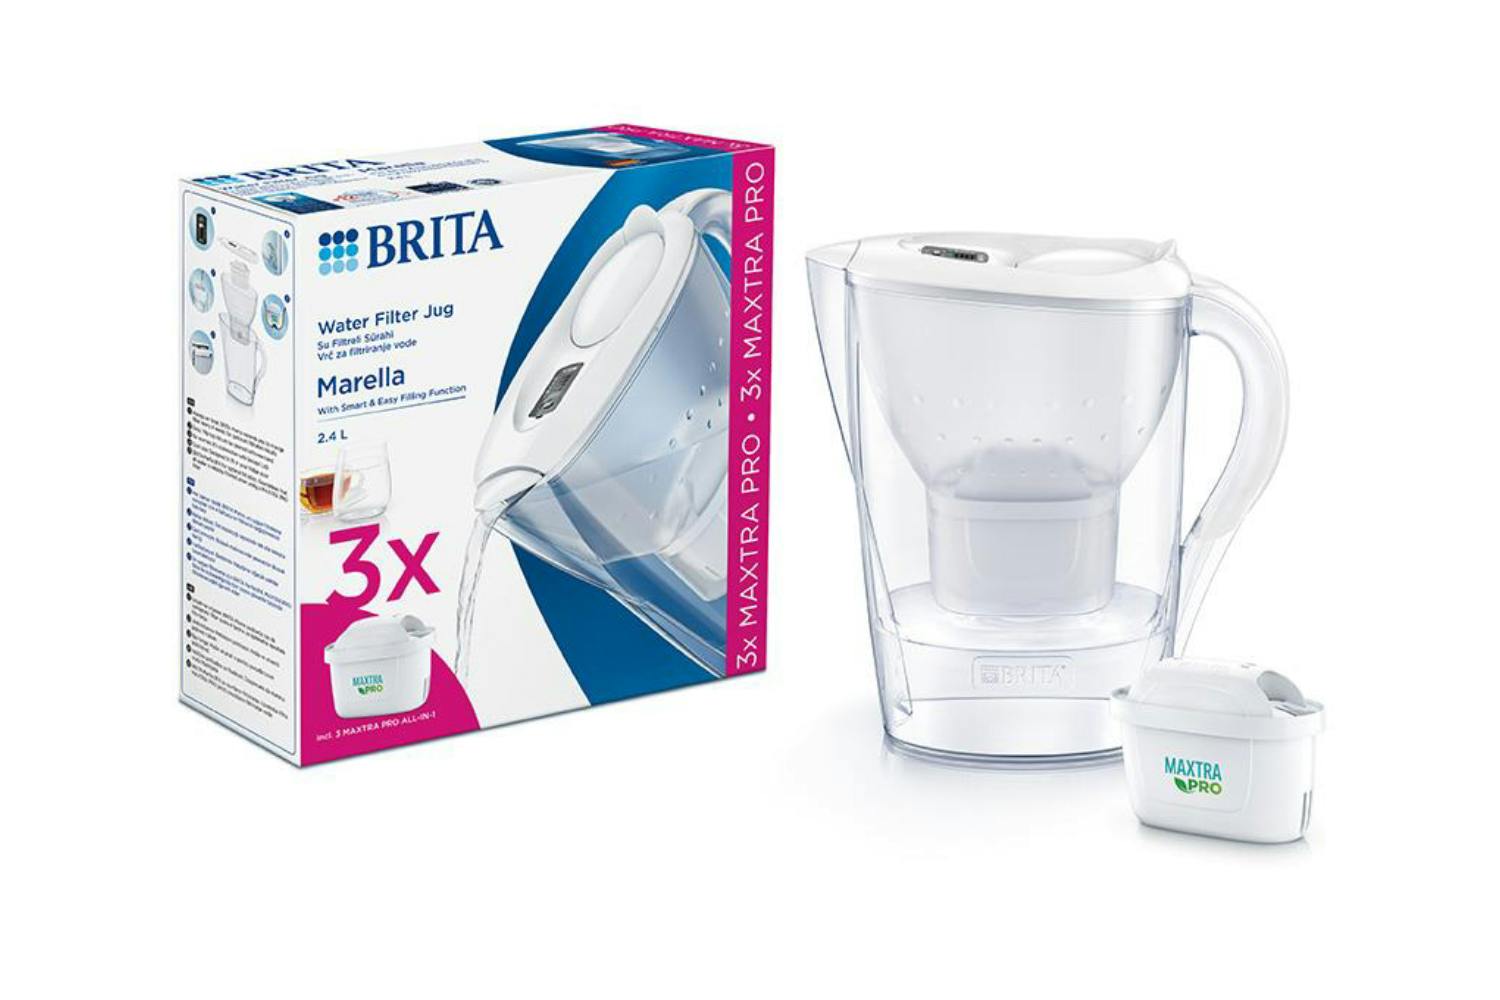 Brita Marella water filter jug 2.4L